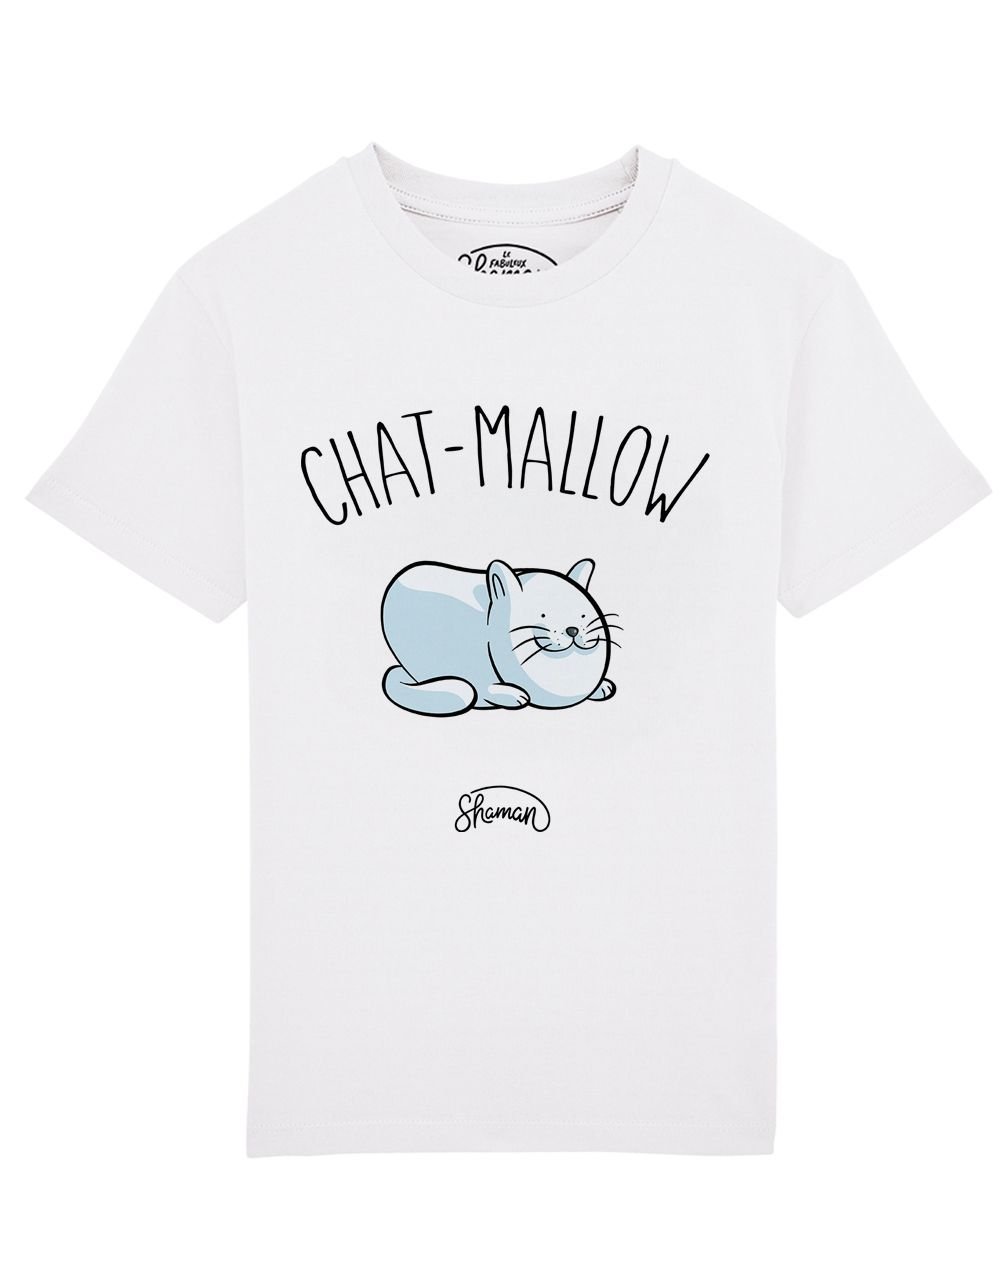 Tee shirt Chat mallow